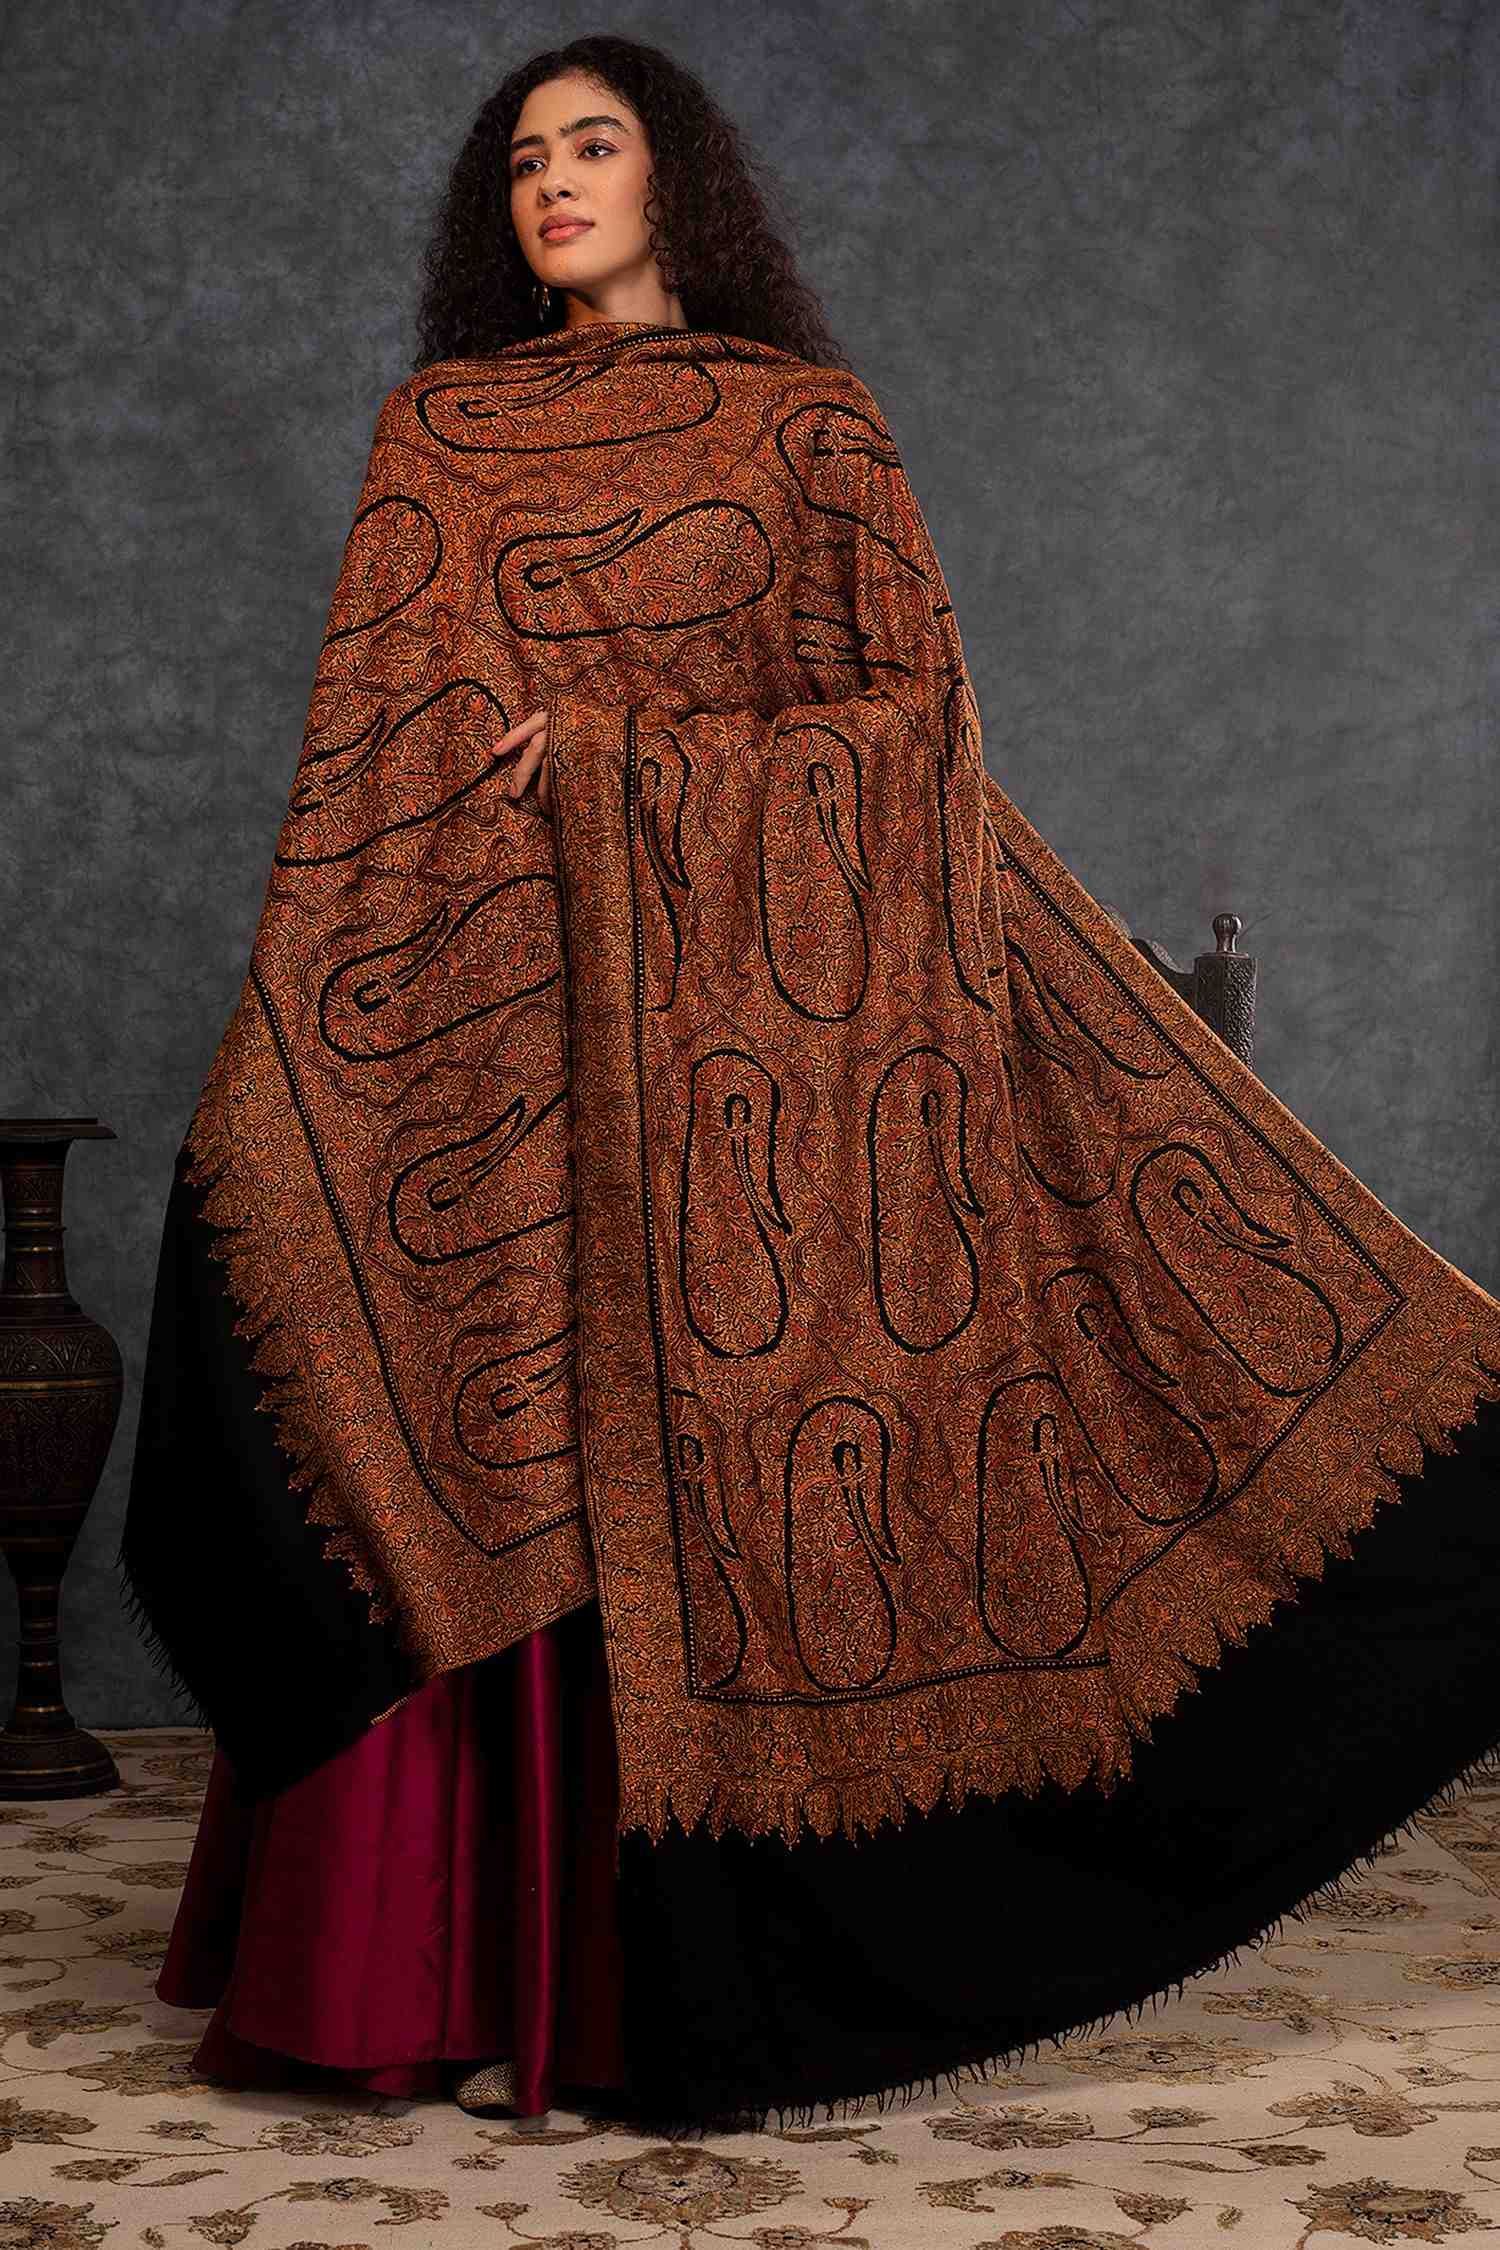 Almas Black Pashmina shawl